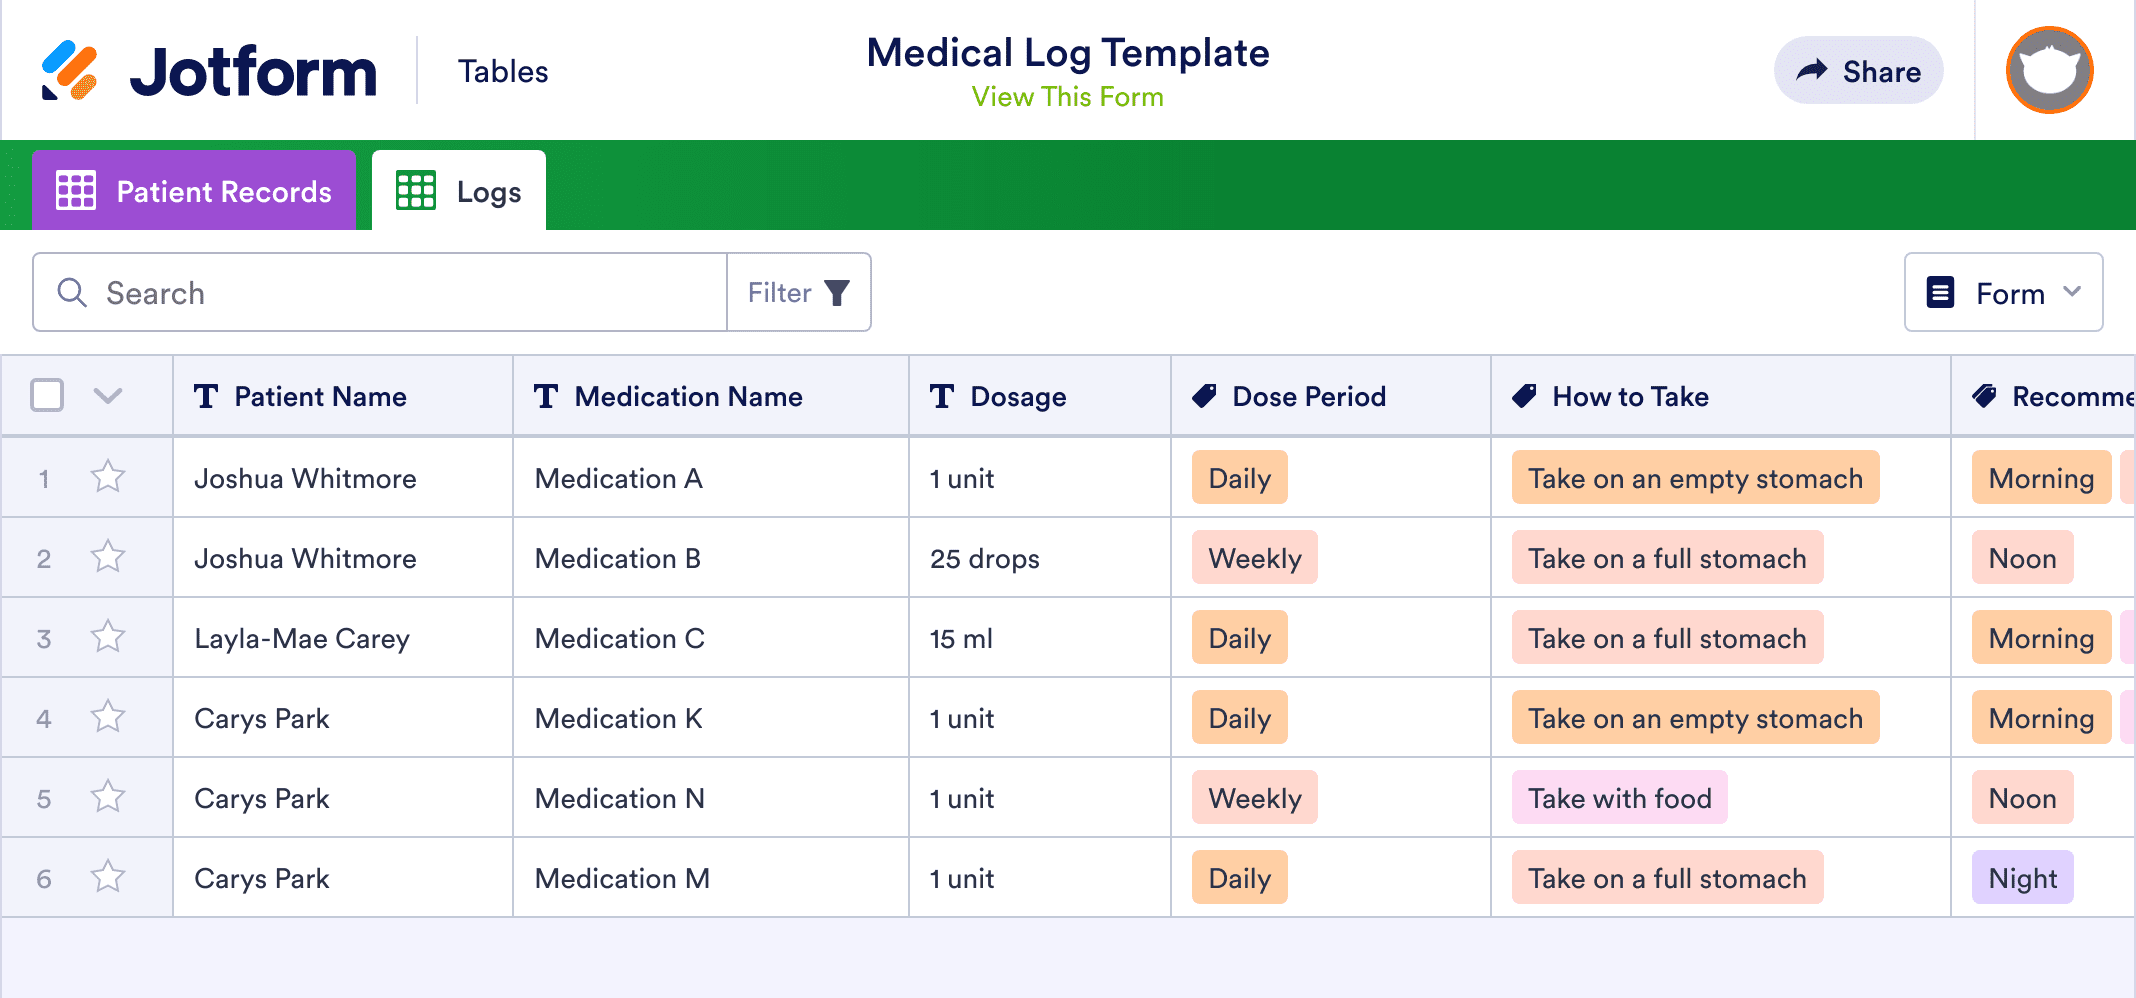 Medical Log Template